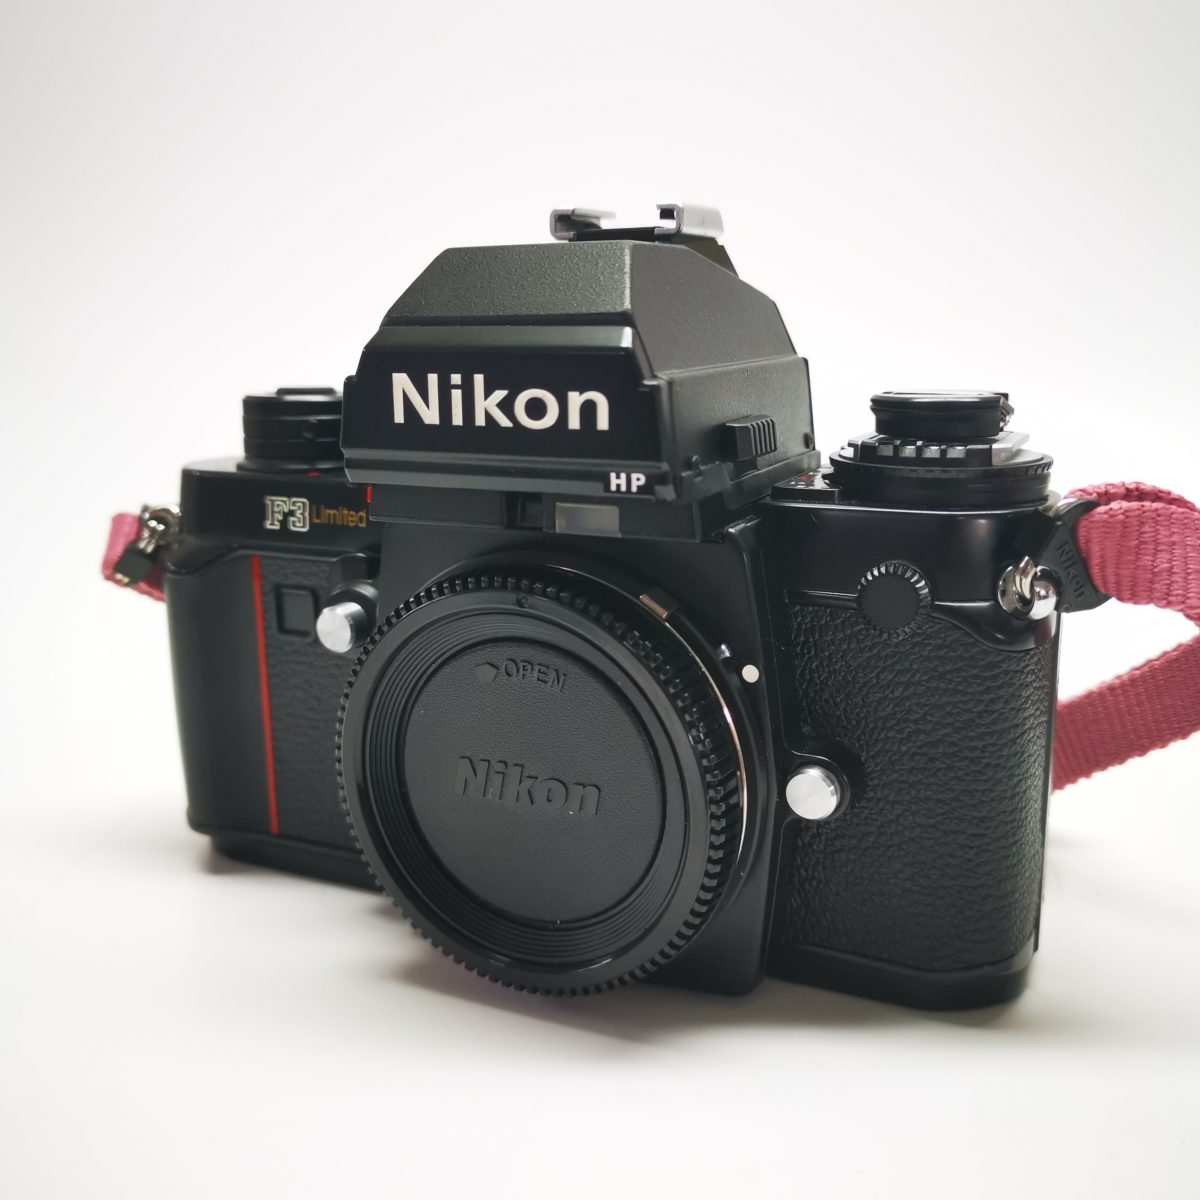 Nikon（ニコン）F3 HP LIMITED 一眼レフカメラ買取 | 中古カメラ